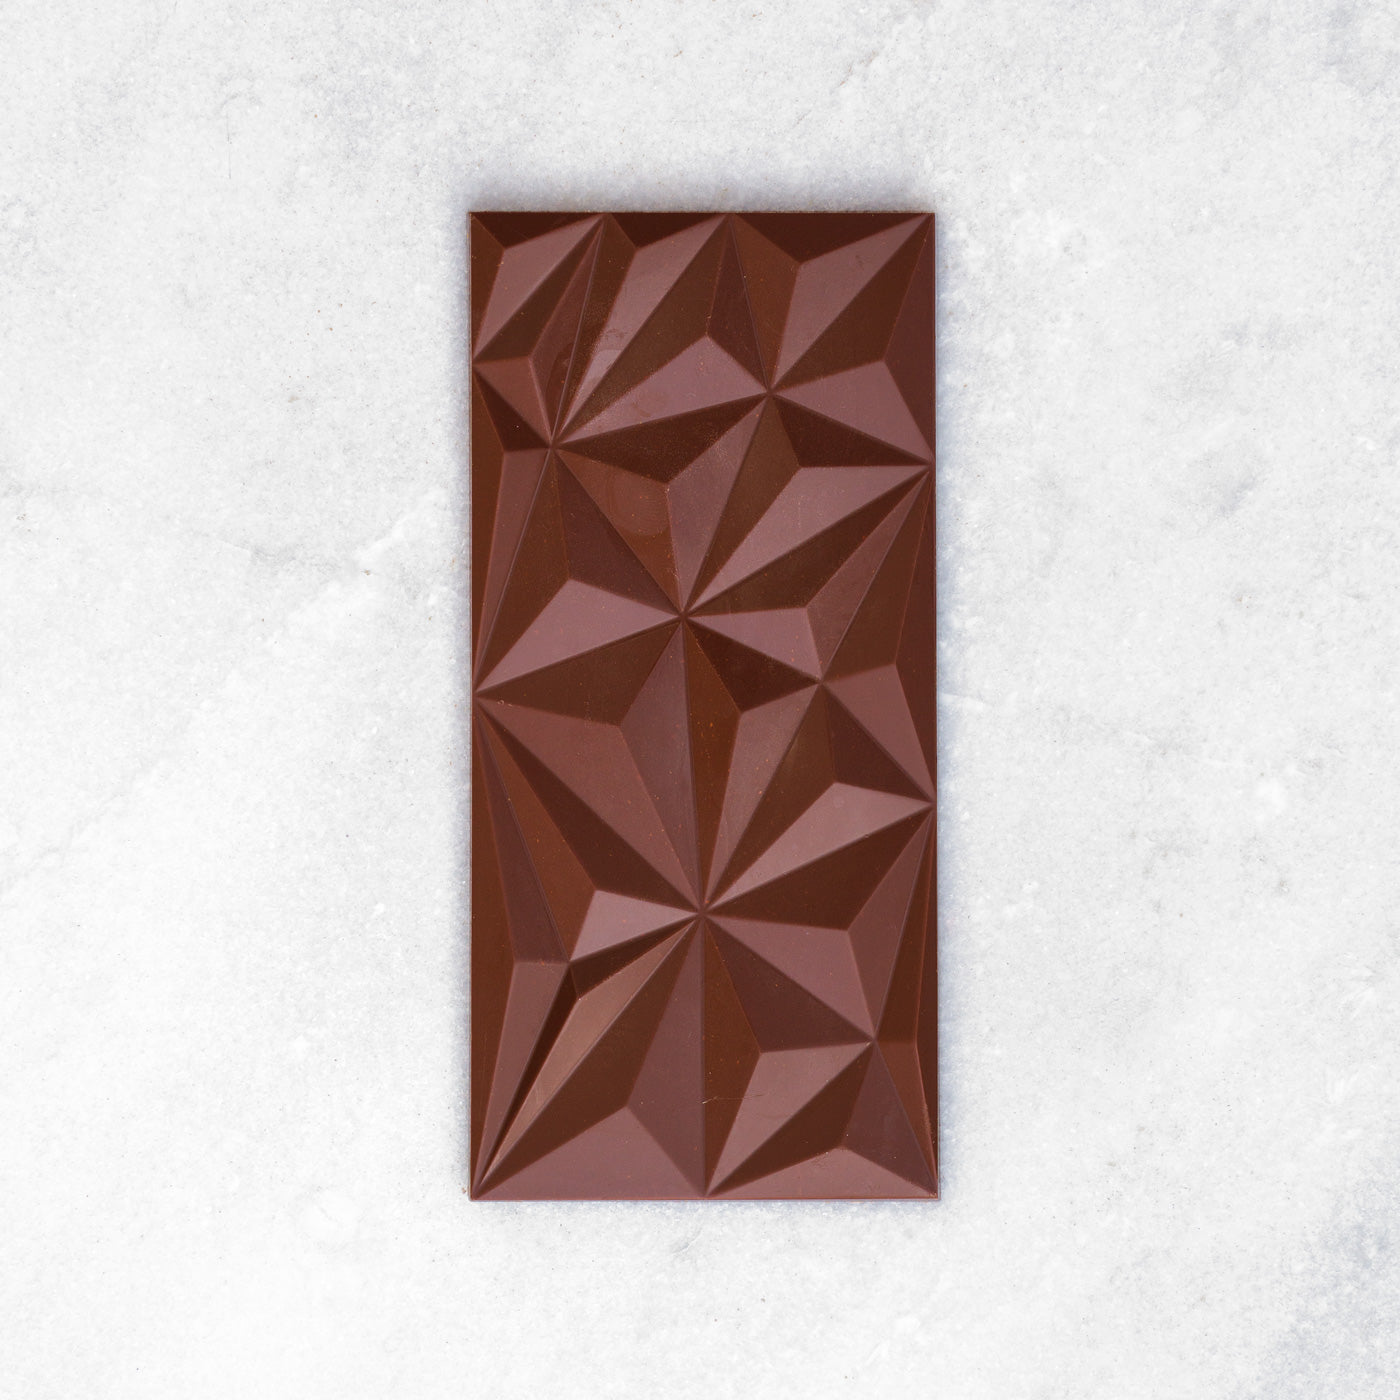 Miso Candied Pecans - 59% Dark Chocolate